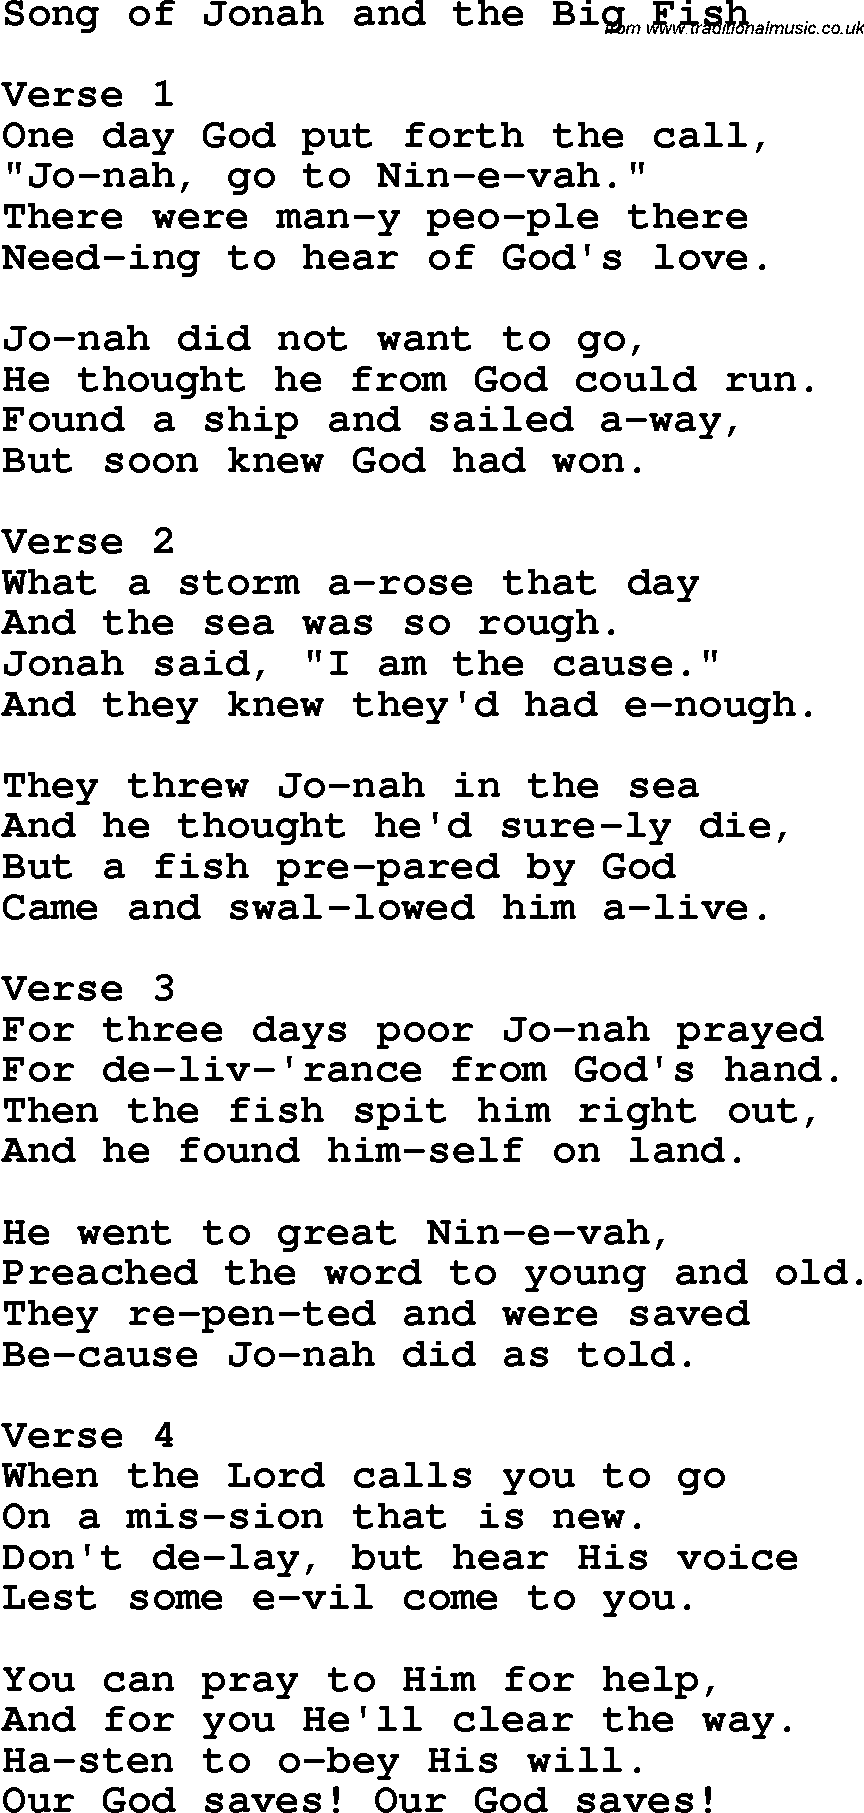 Christian Chlidrens Song Song Of Jonah And The Big Fish Lyrics